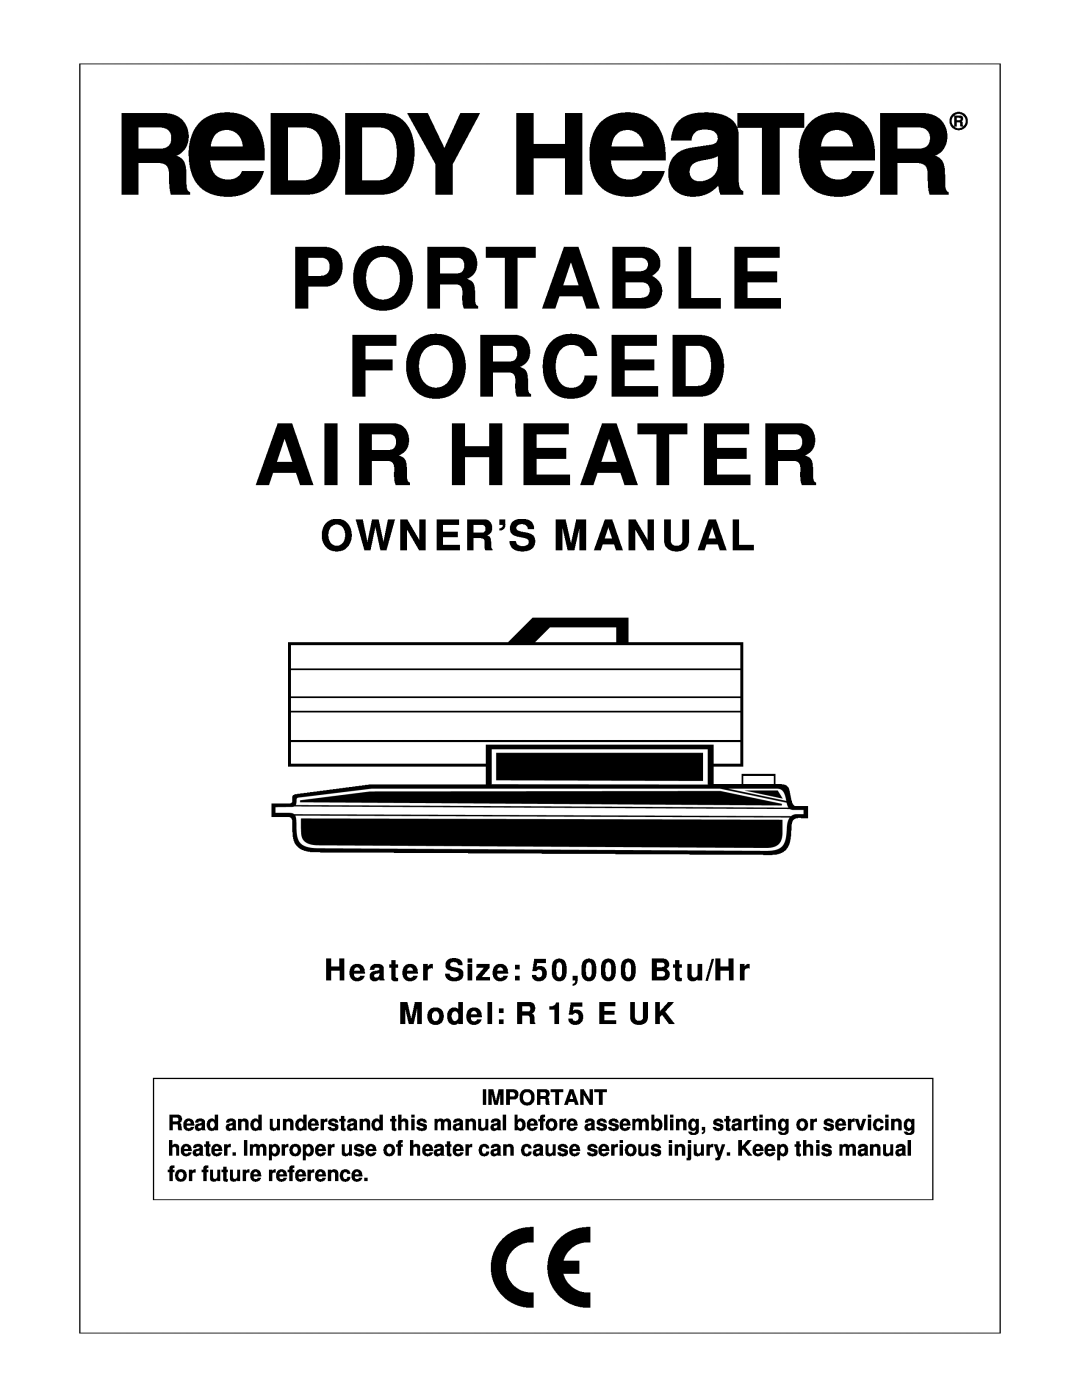 Desa owner manual Portable Forced Air Heater, Heater Size 50,000 Btu/Hr Model R 15 E UK 